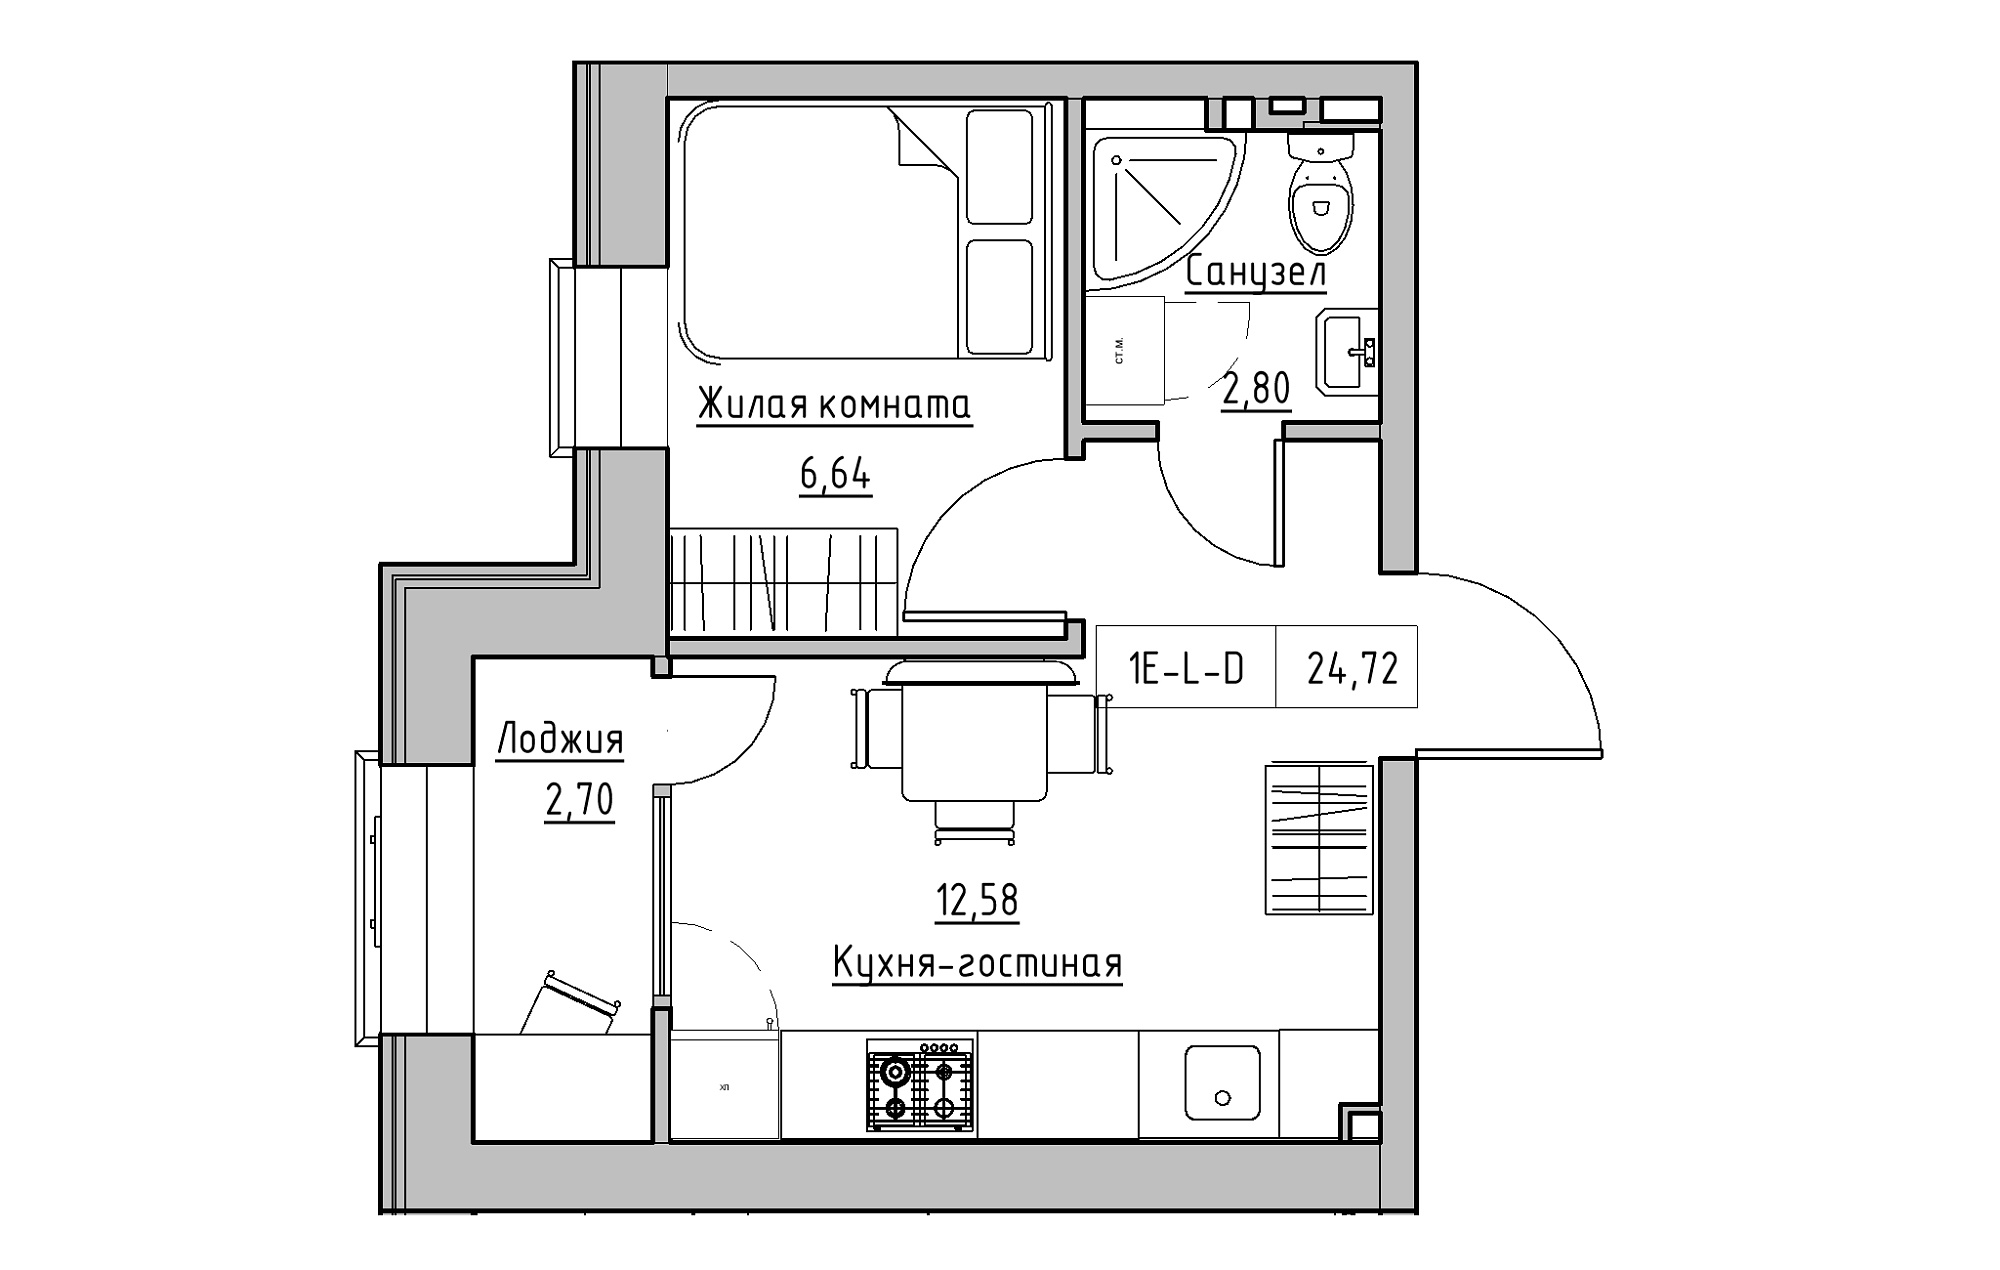 Planning 1-rm flats area 24.72m2, KS-018-05/0016.